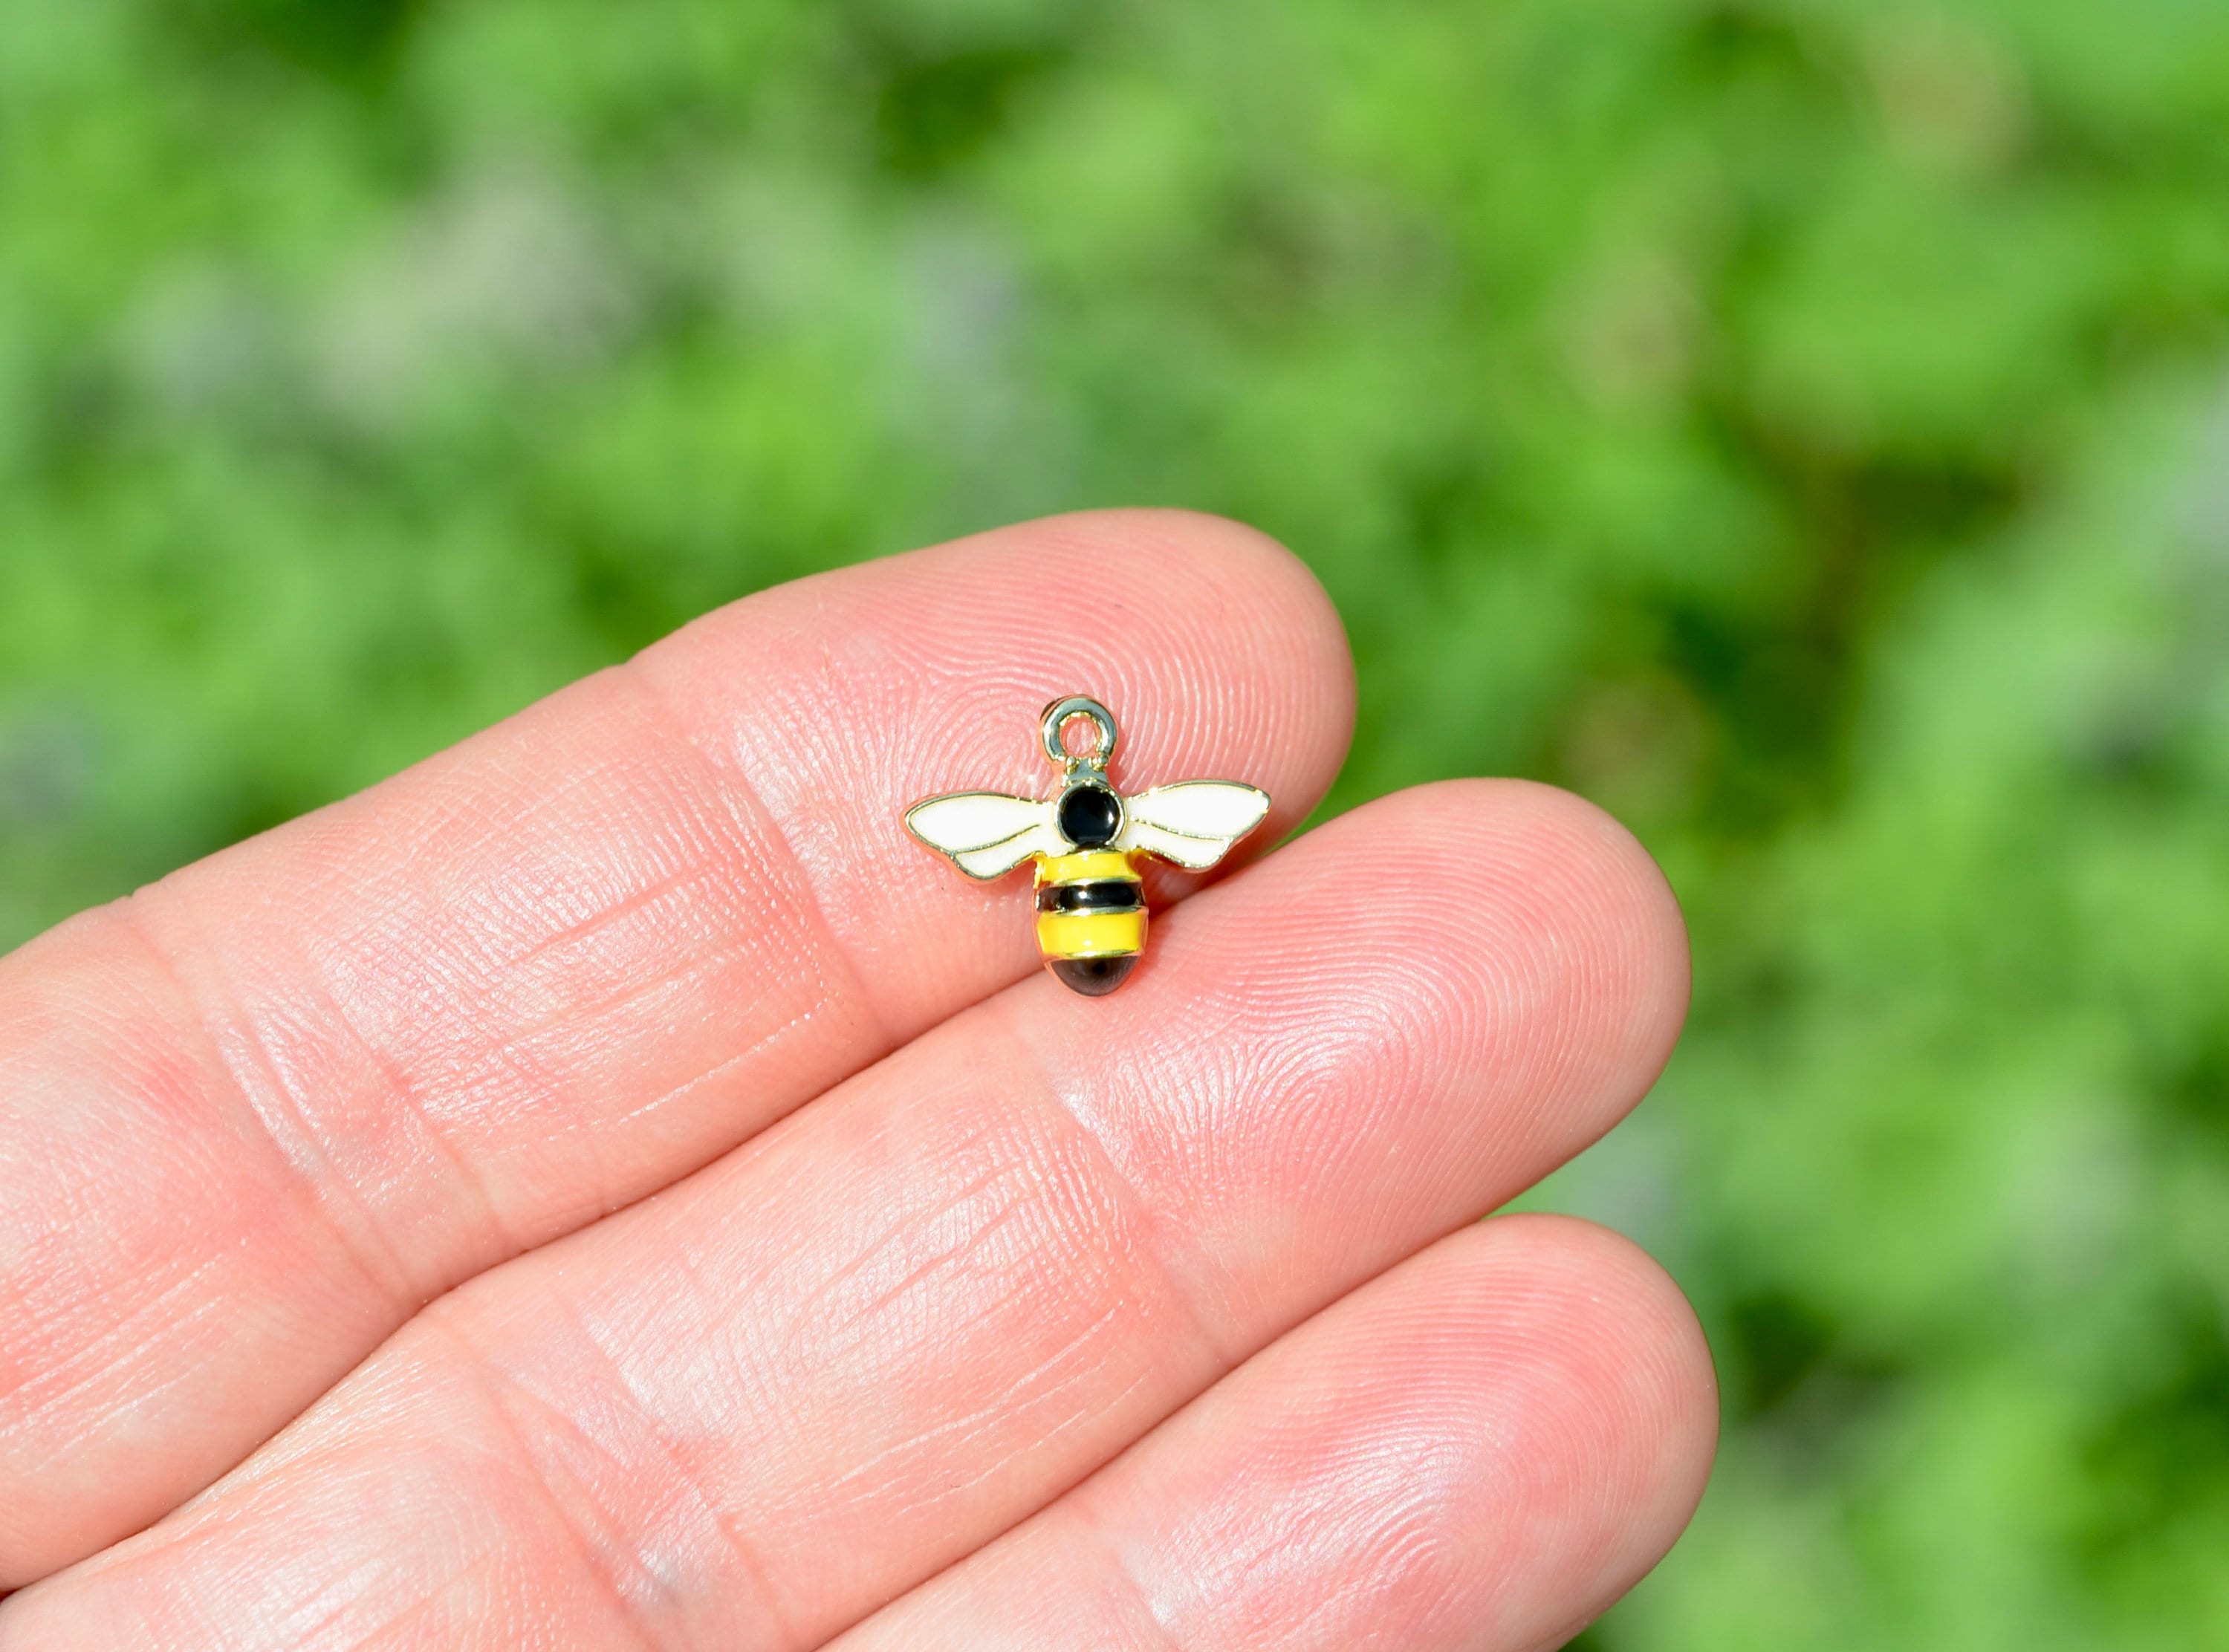 John Bead Sweet & Petite Bumble Bee Charms 8ct.